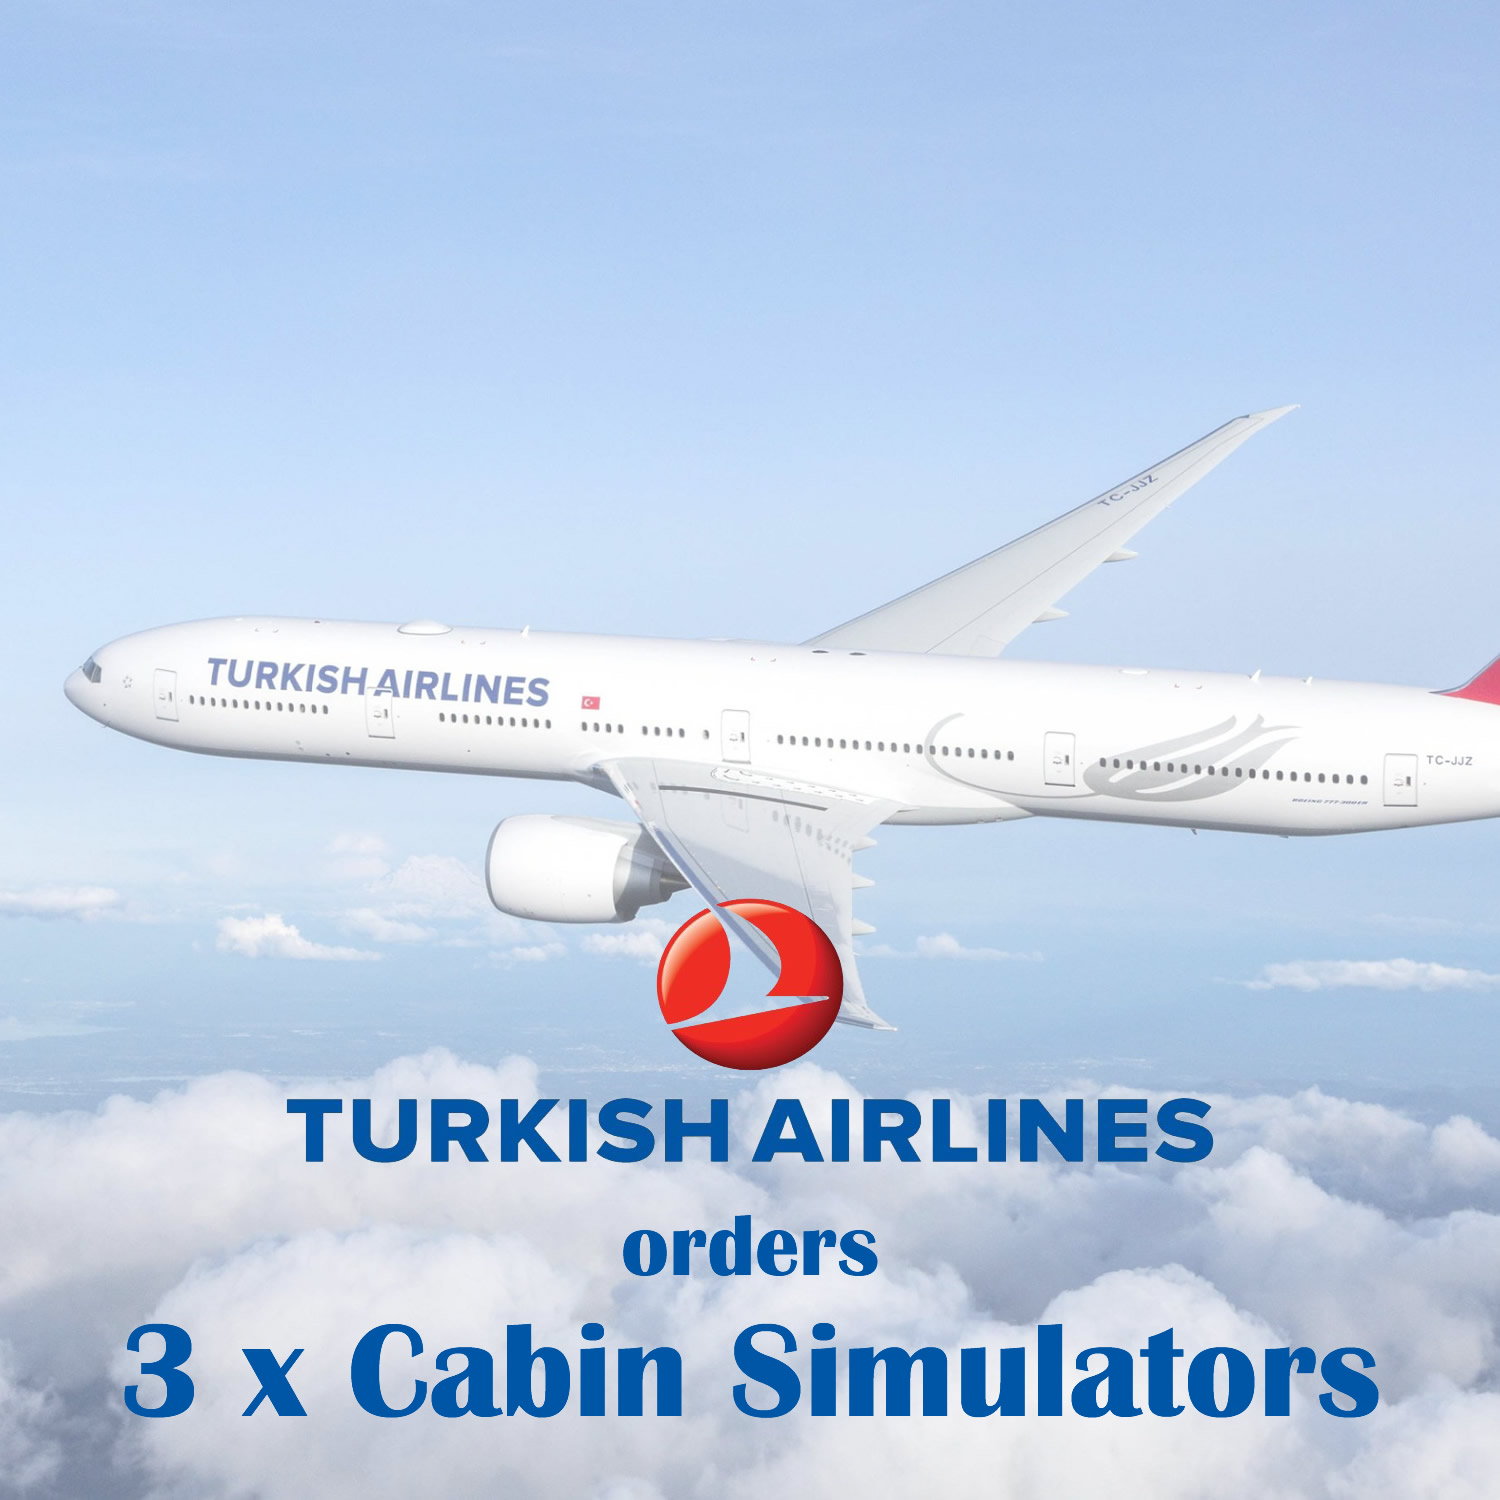 Turkish Airlines orders 3 x Simulators from SkyArt